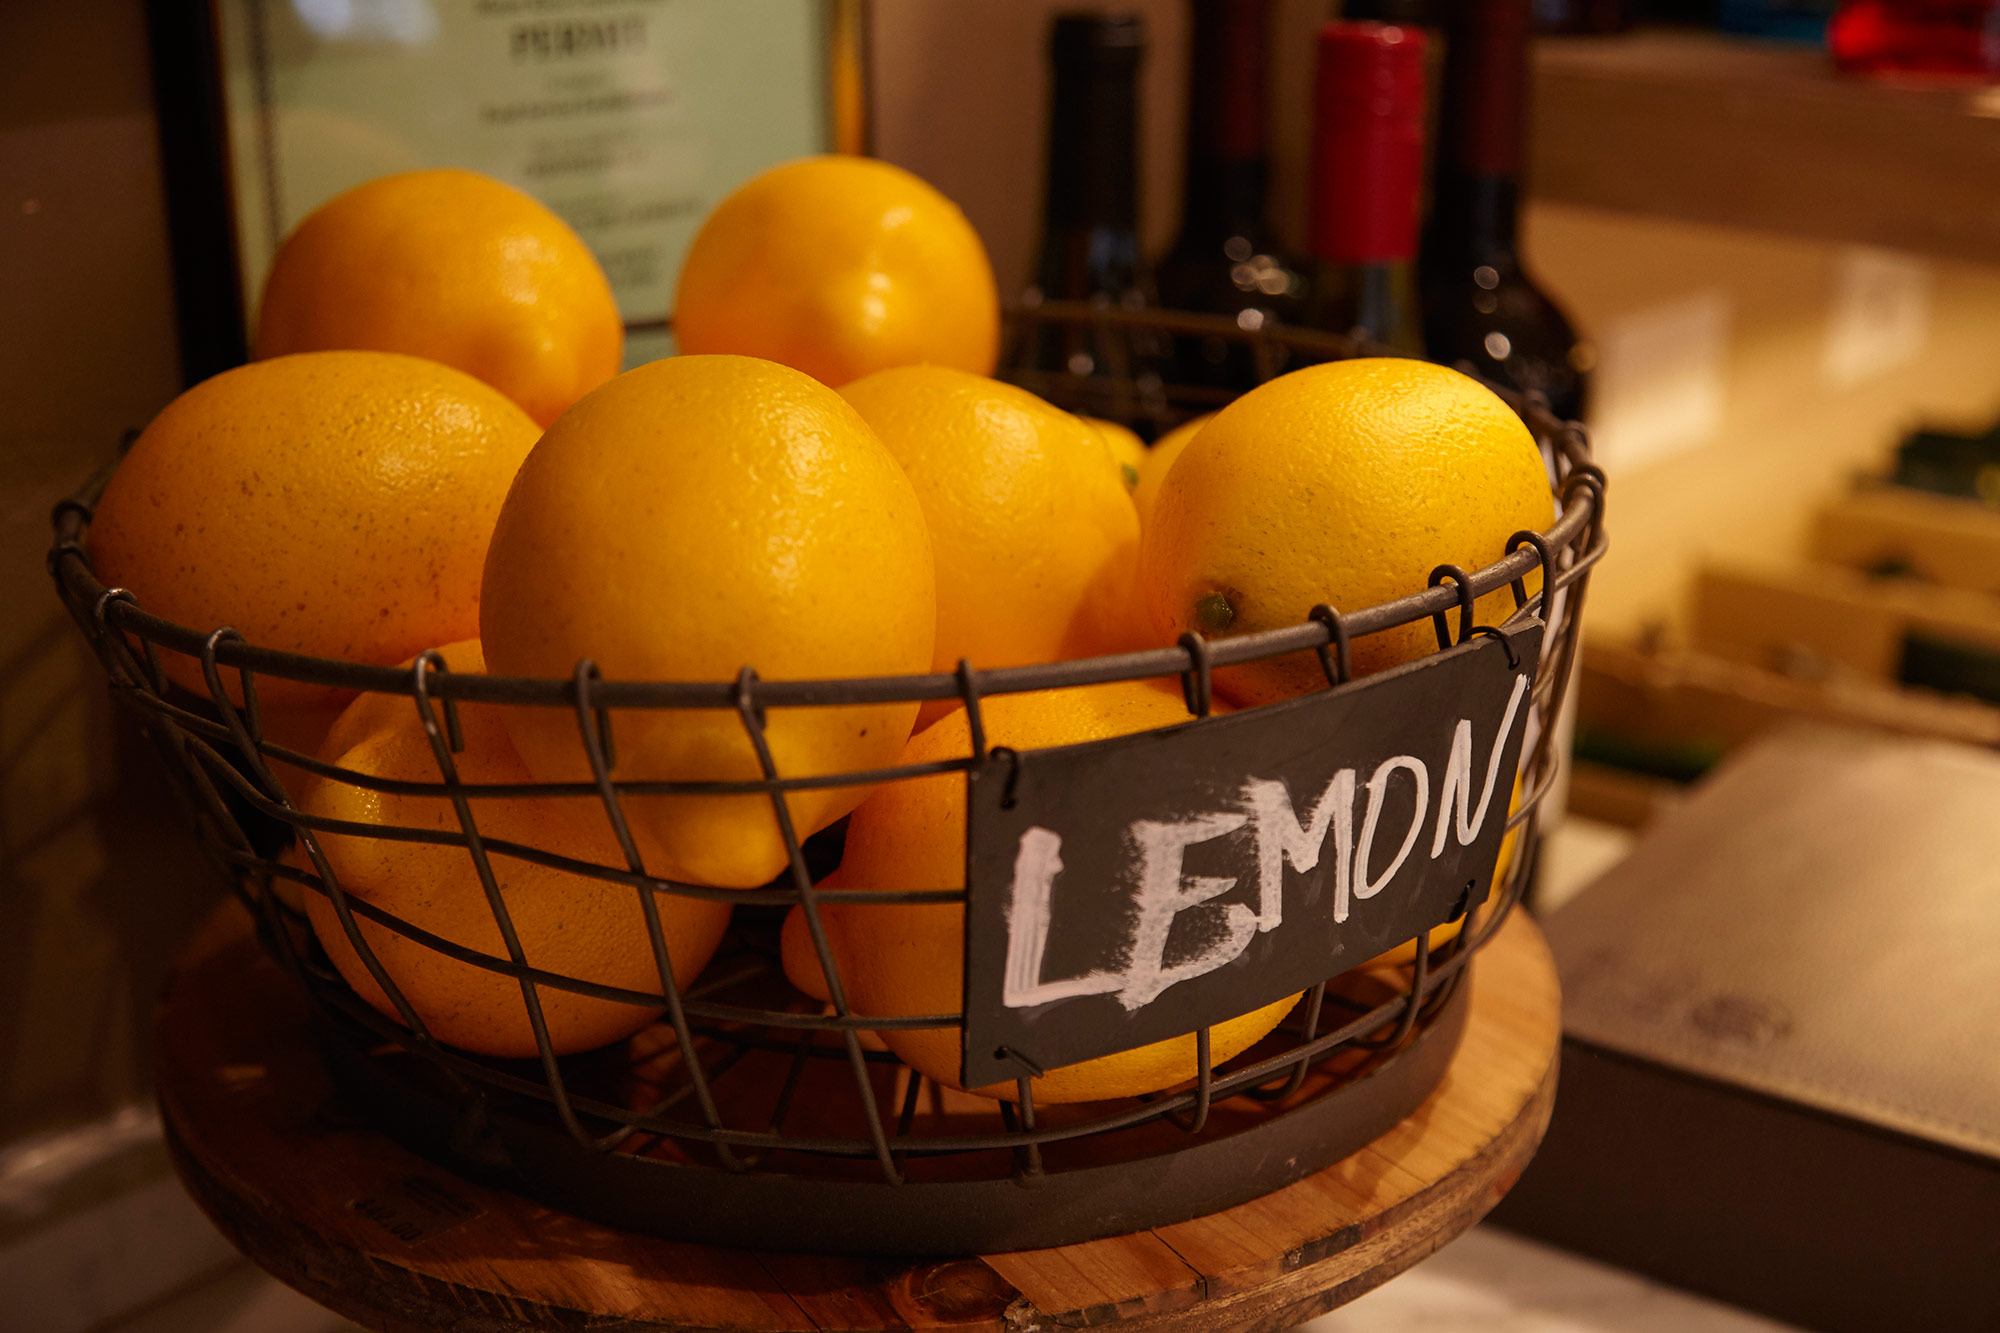   lemons in a bowl ©2018 by bret wills